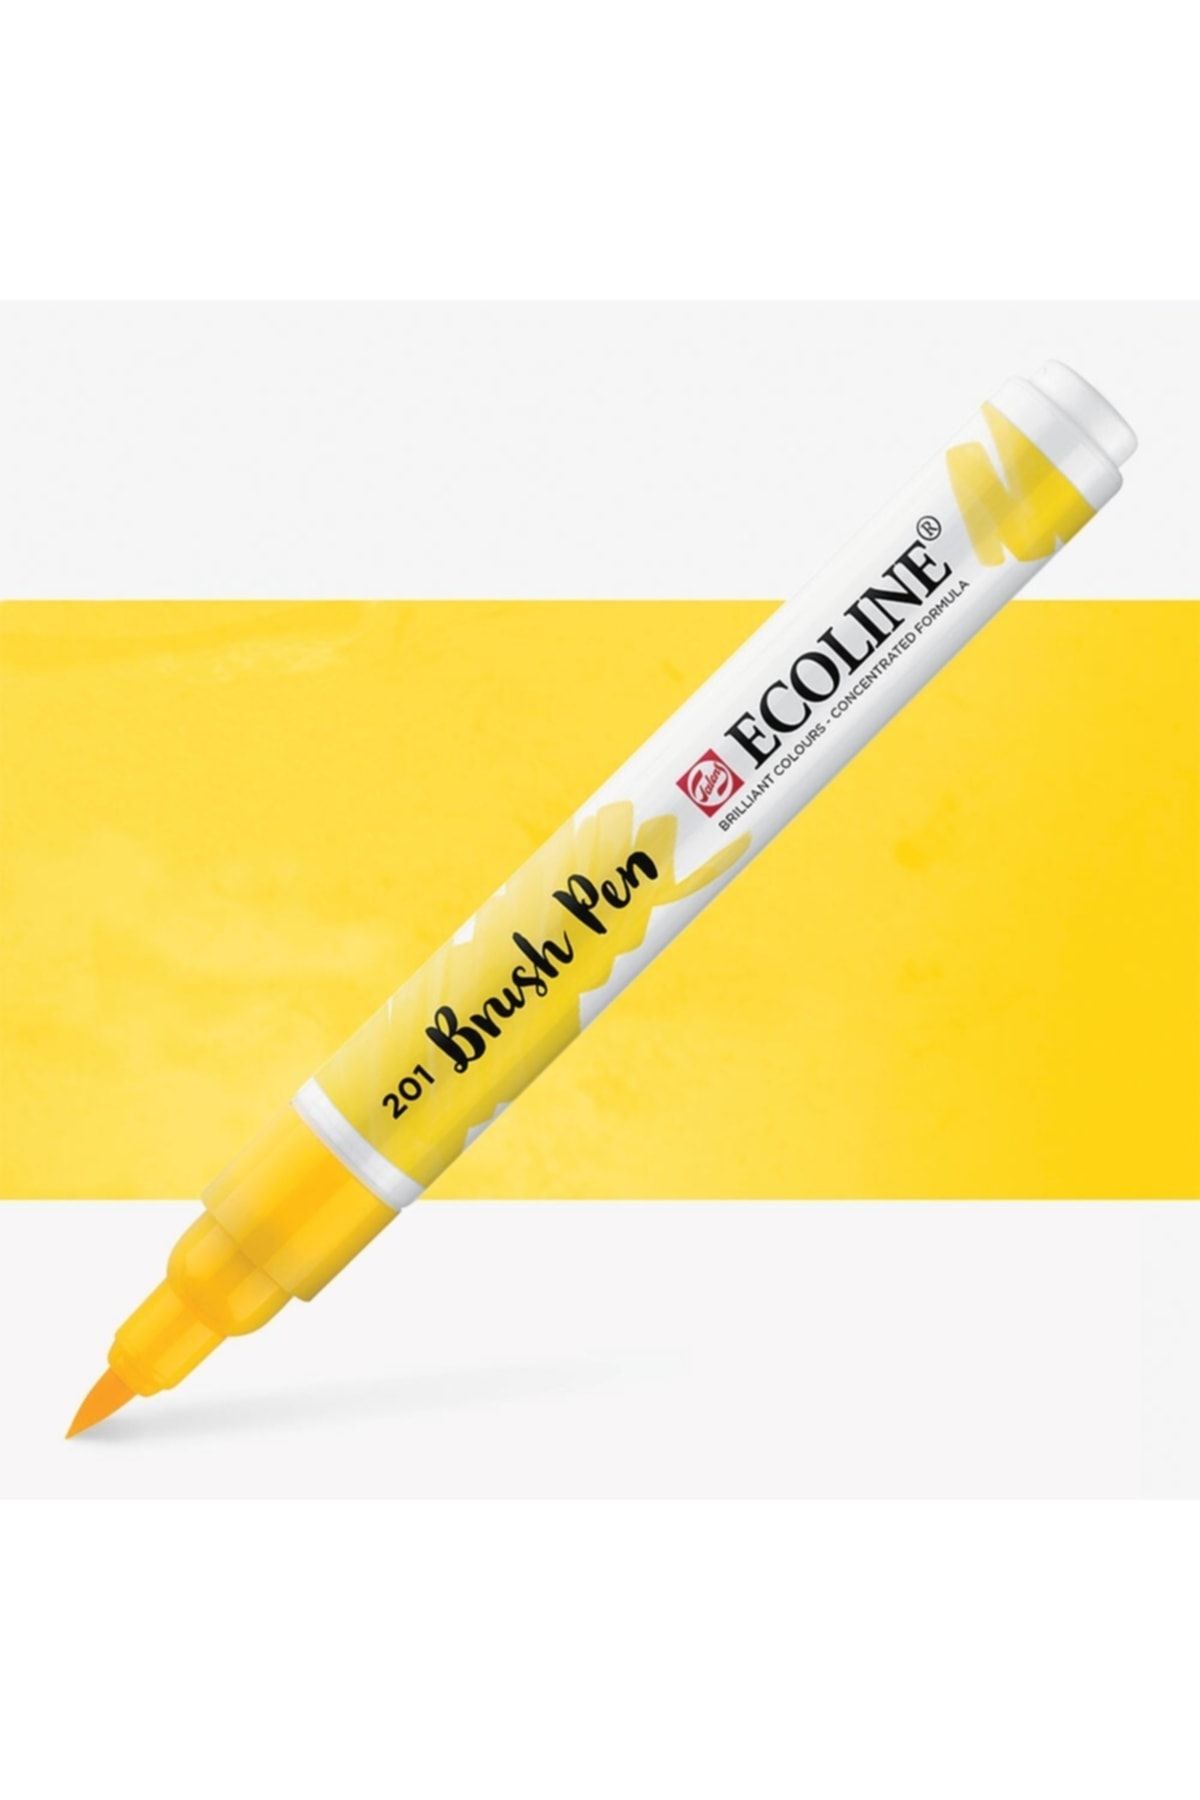 Talens Ecoline Suluboya Brush Pen Light Yellow 201